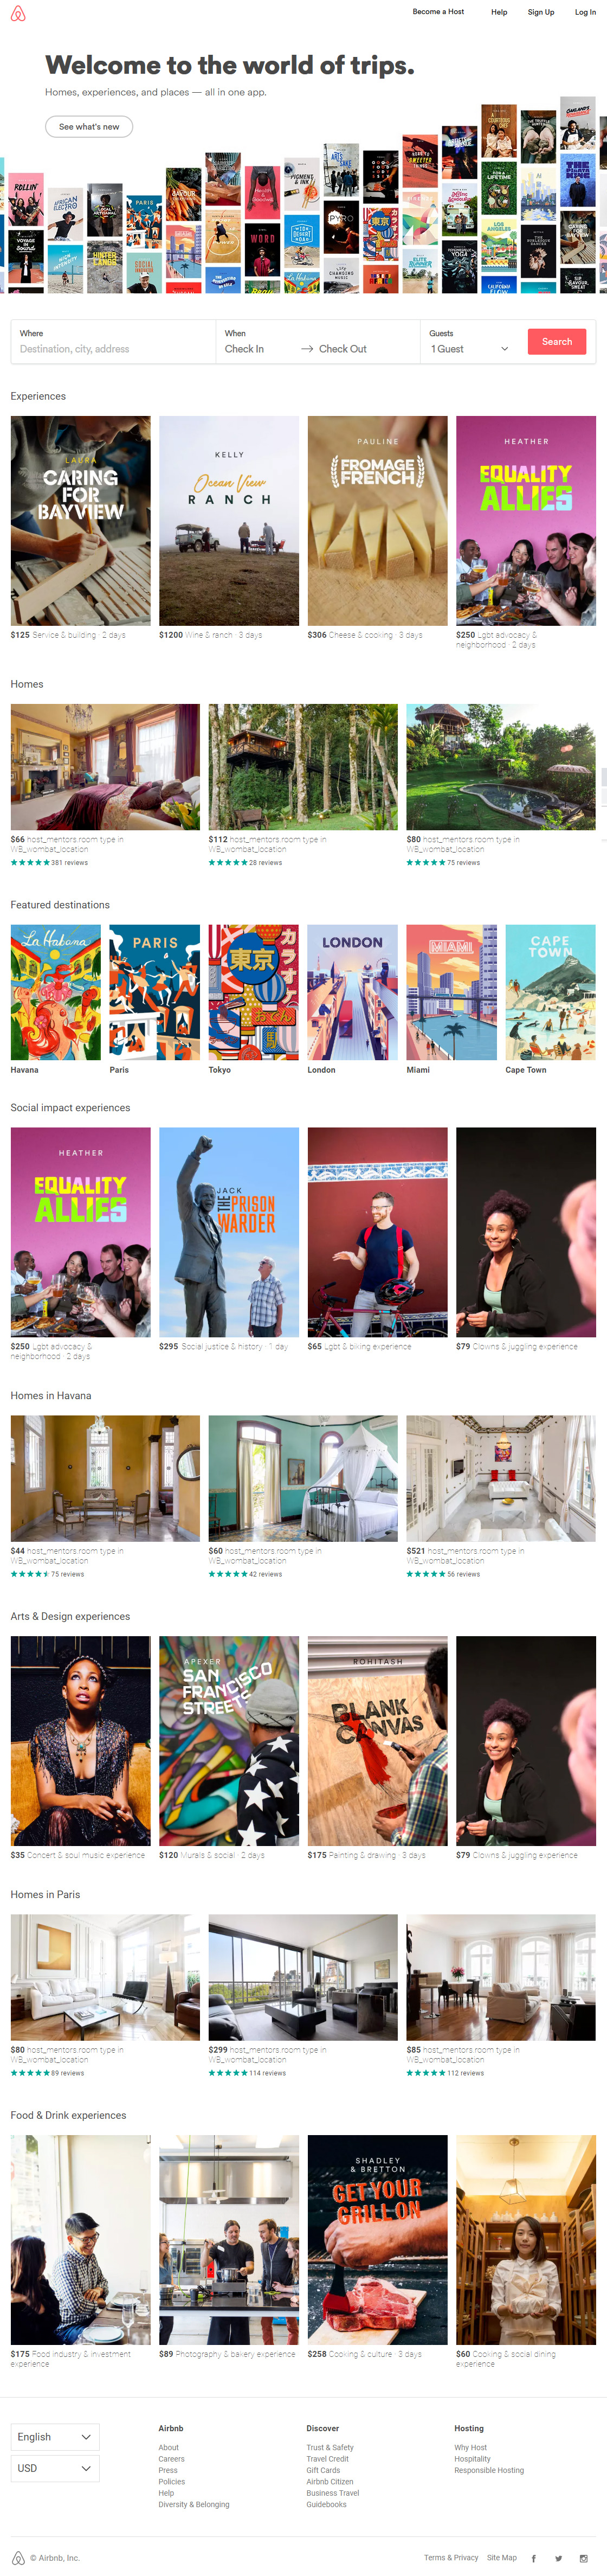 Airbnb website in 2016